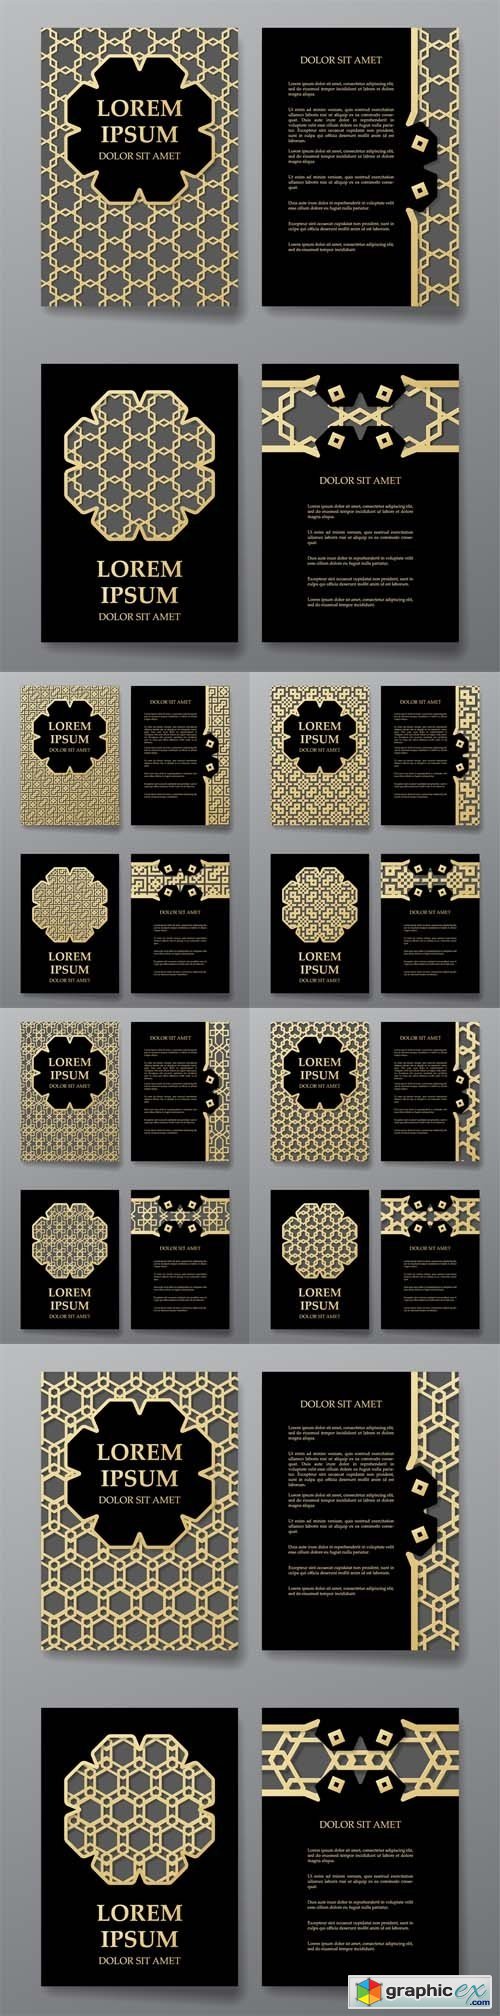 Cover brochure gold design. Arabic traditional decorative elements